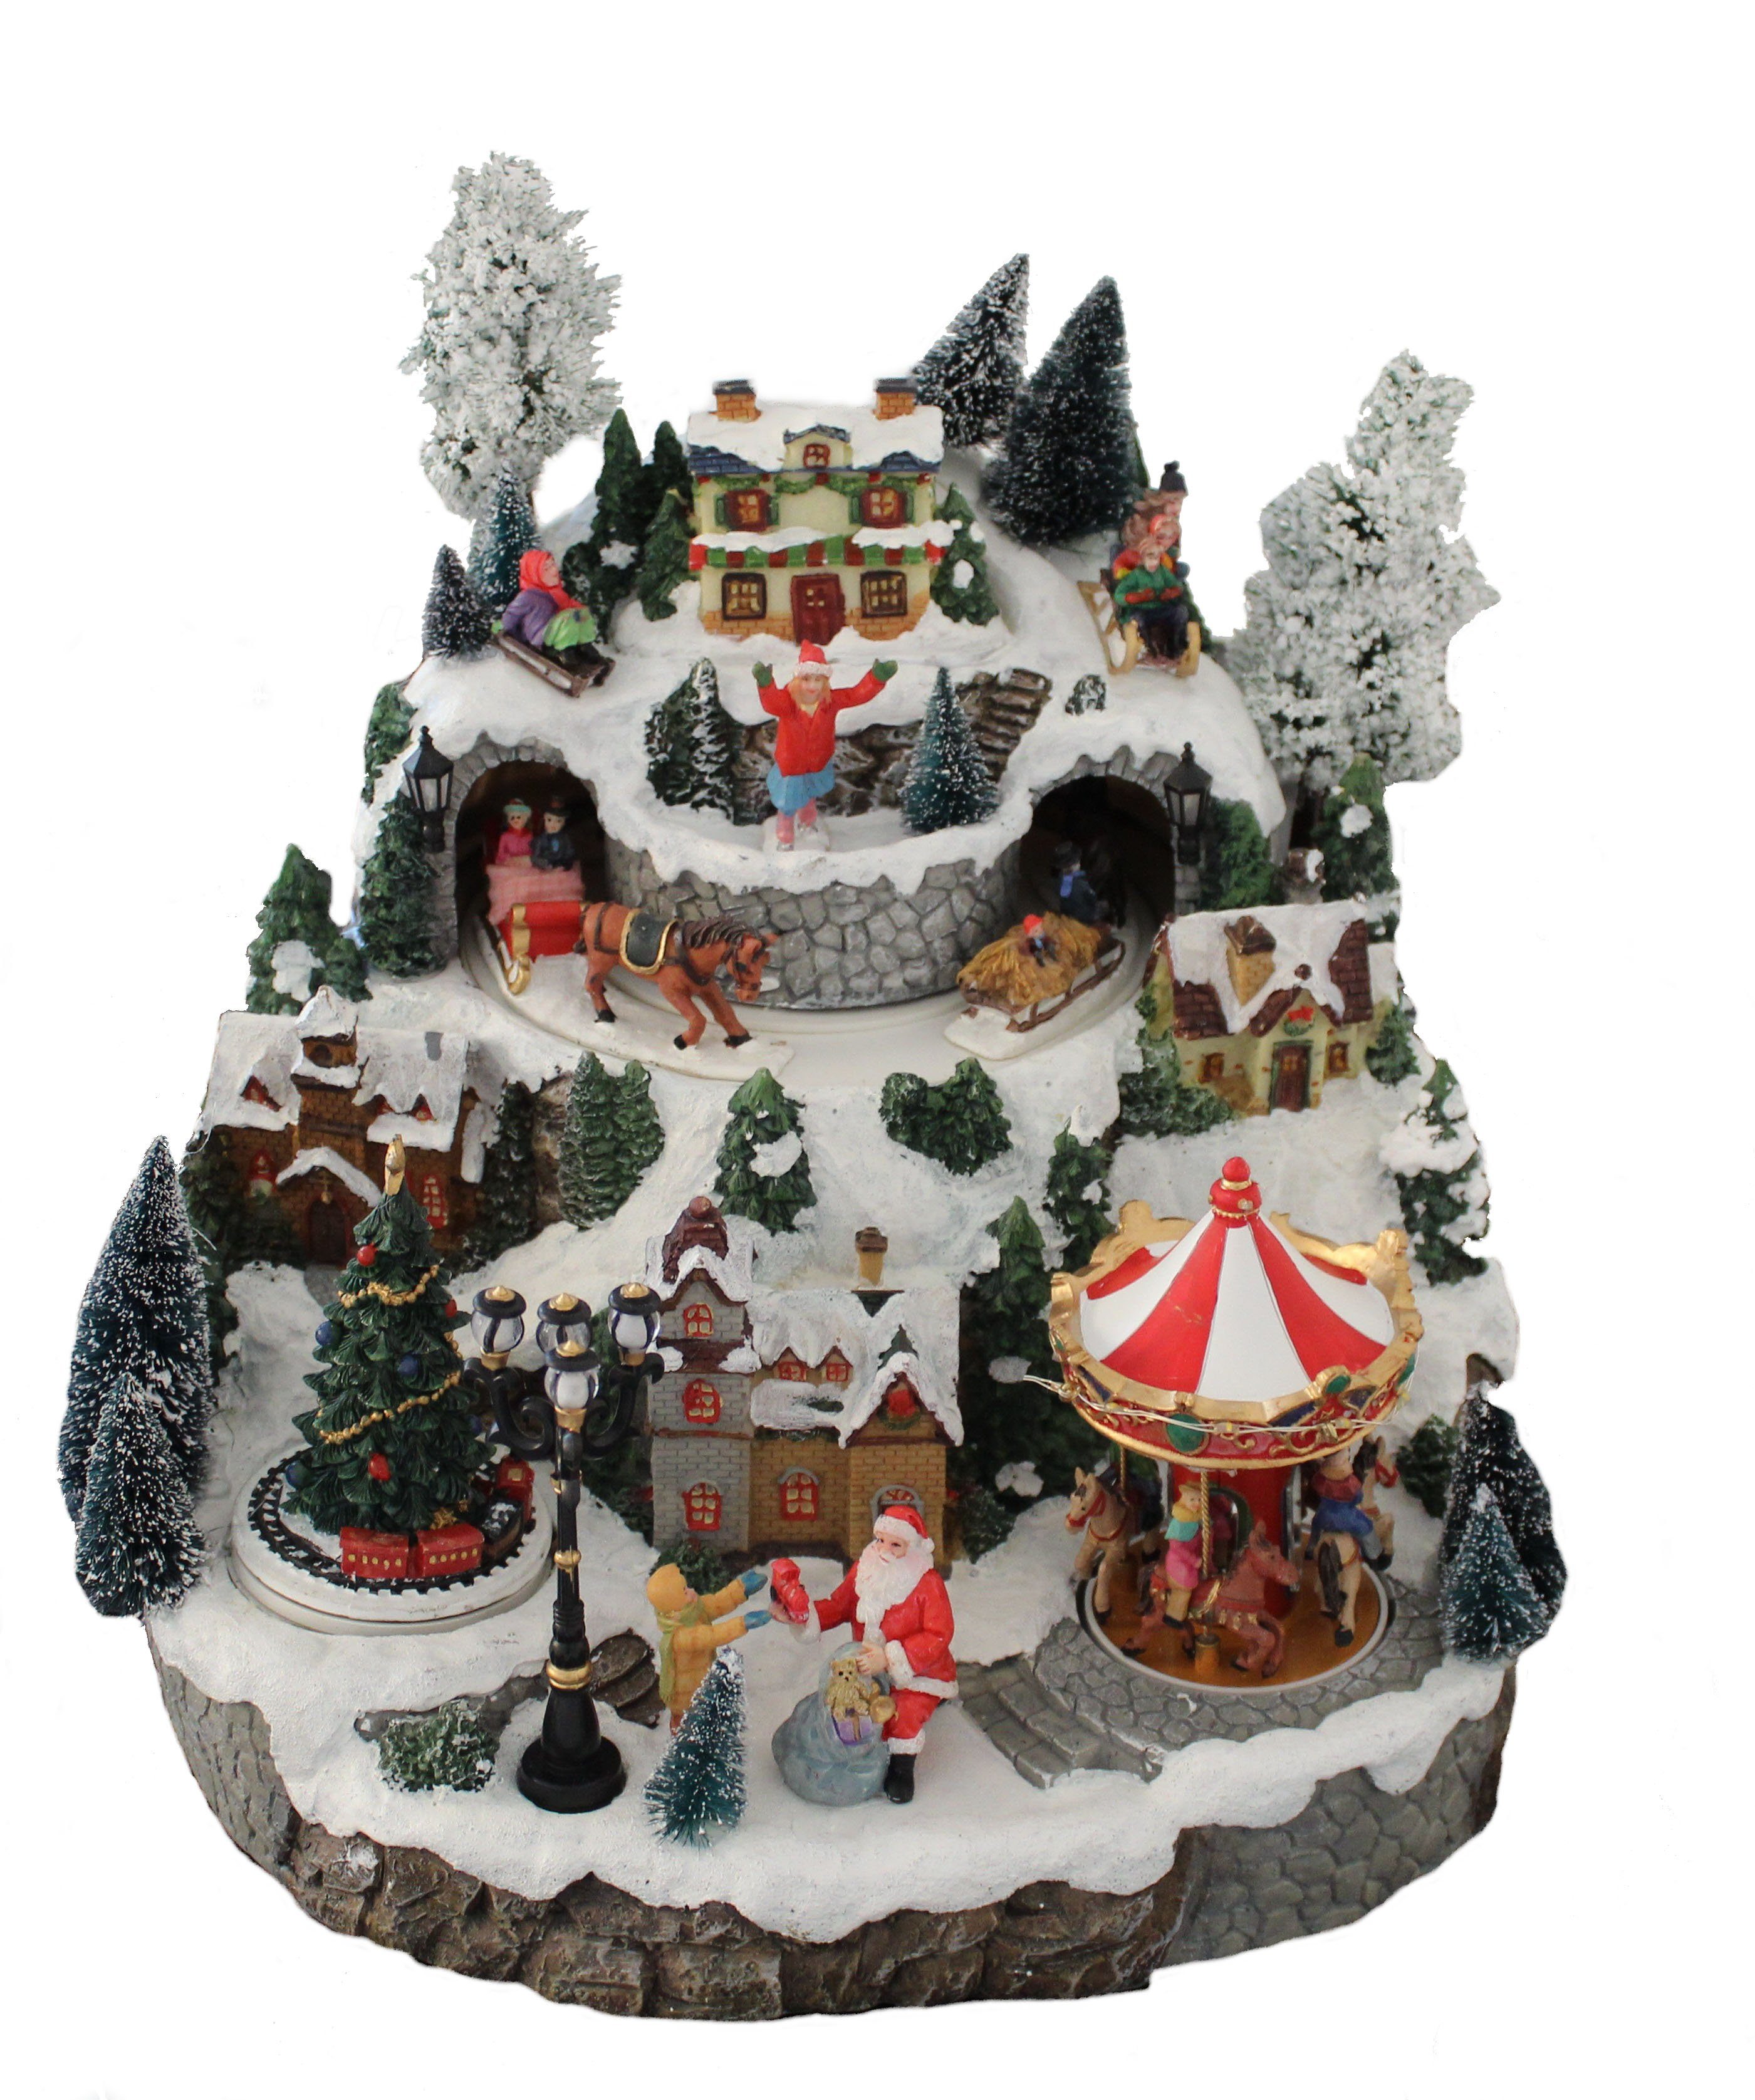 G. Wurm Weihnachtsszene Winterszene mit Karussell, Baum, Figuren, Beleuchtung & Musik